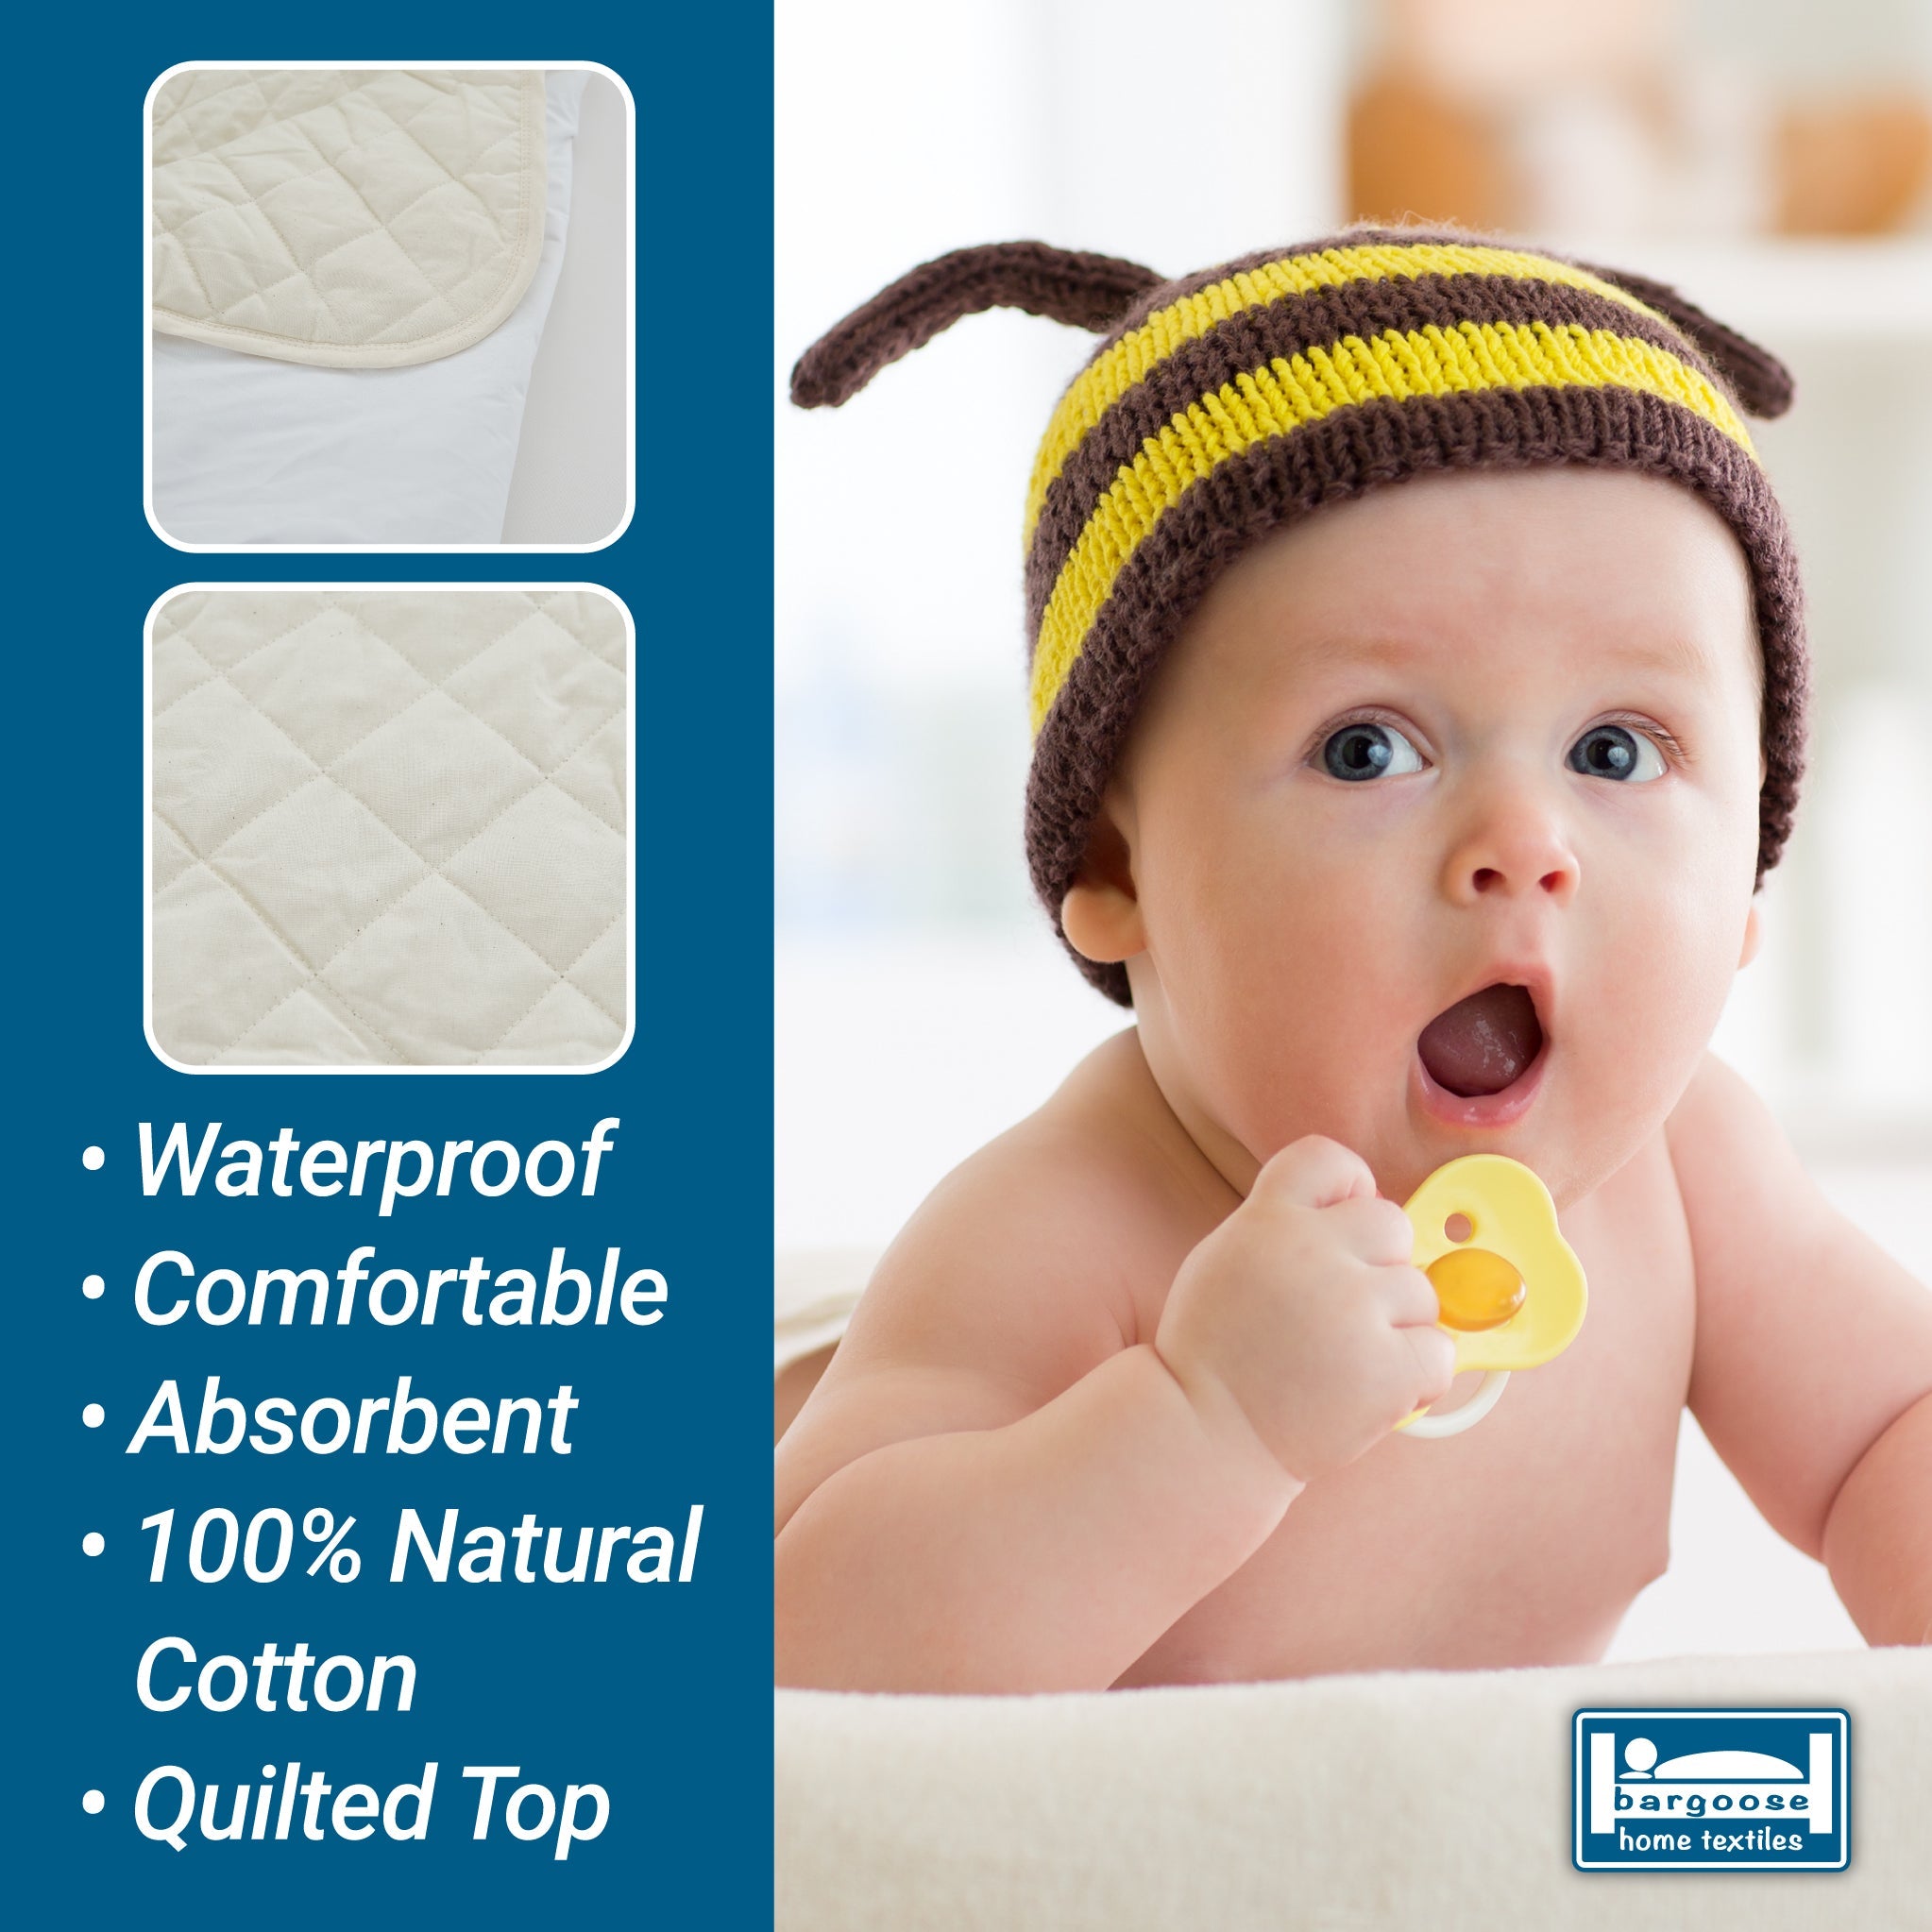 Bassinet - 100% Natural Cotton Top Waterproof Flat Crib Mattress Pad -15 x 30 - 2 Pack Crib Sheet Bargoose Home Textiles, Inc. 